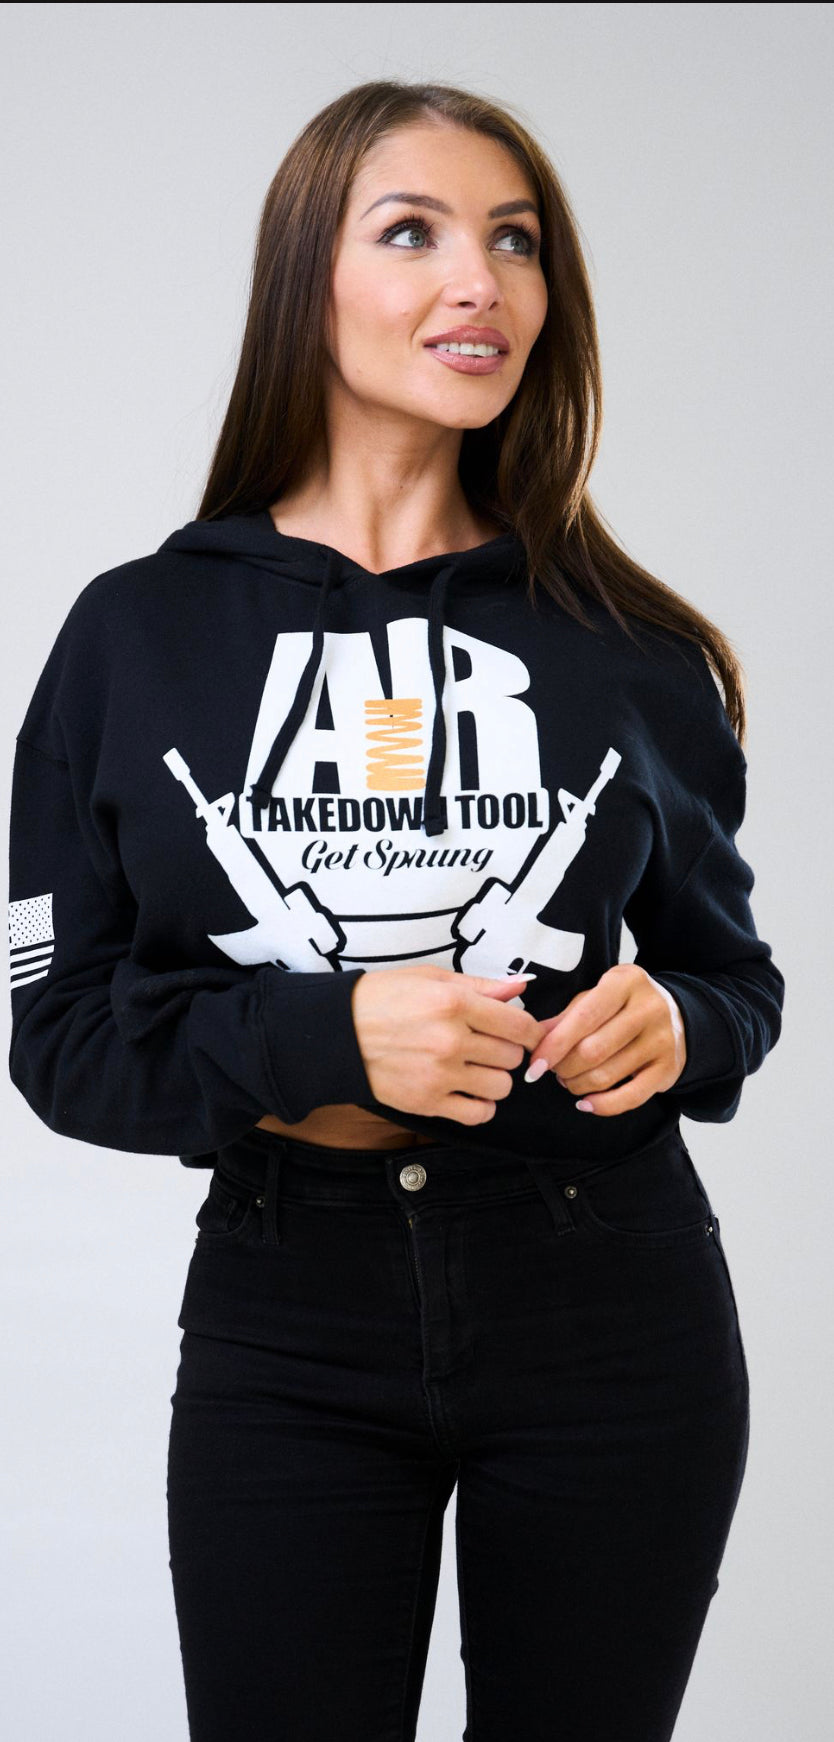 Women’s Get Sprung Crop Top hoodie V3 XS-XL - AR TakeDown Tool 